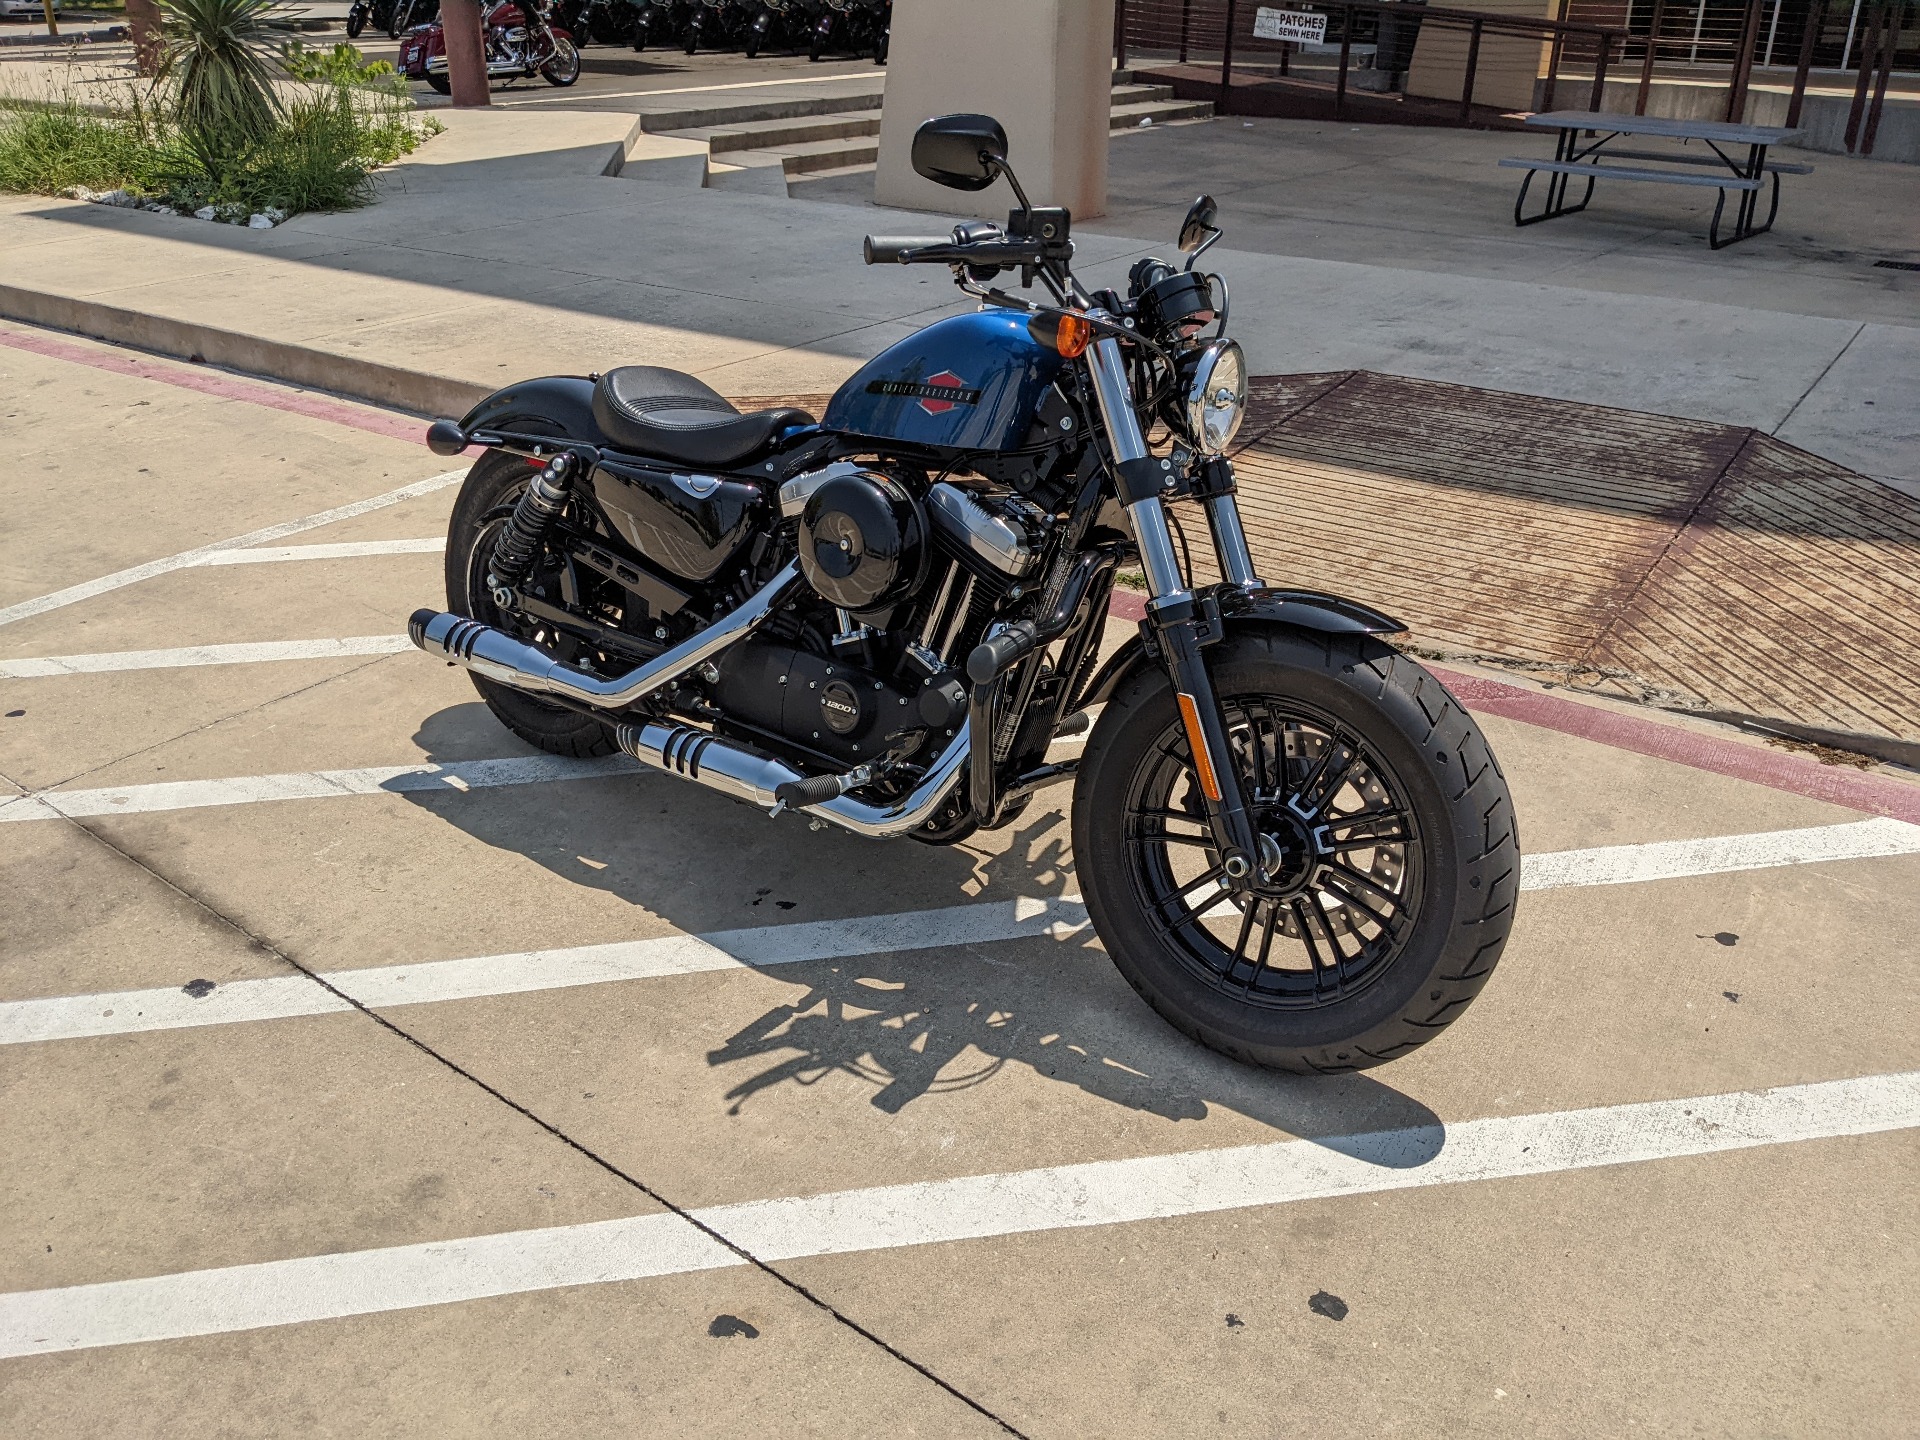 2022 Harley-Davidson Forty-Eight® in San Antonio, Texas - Photo 2